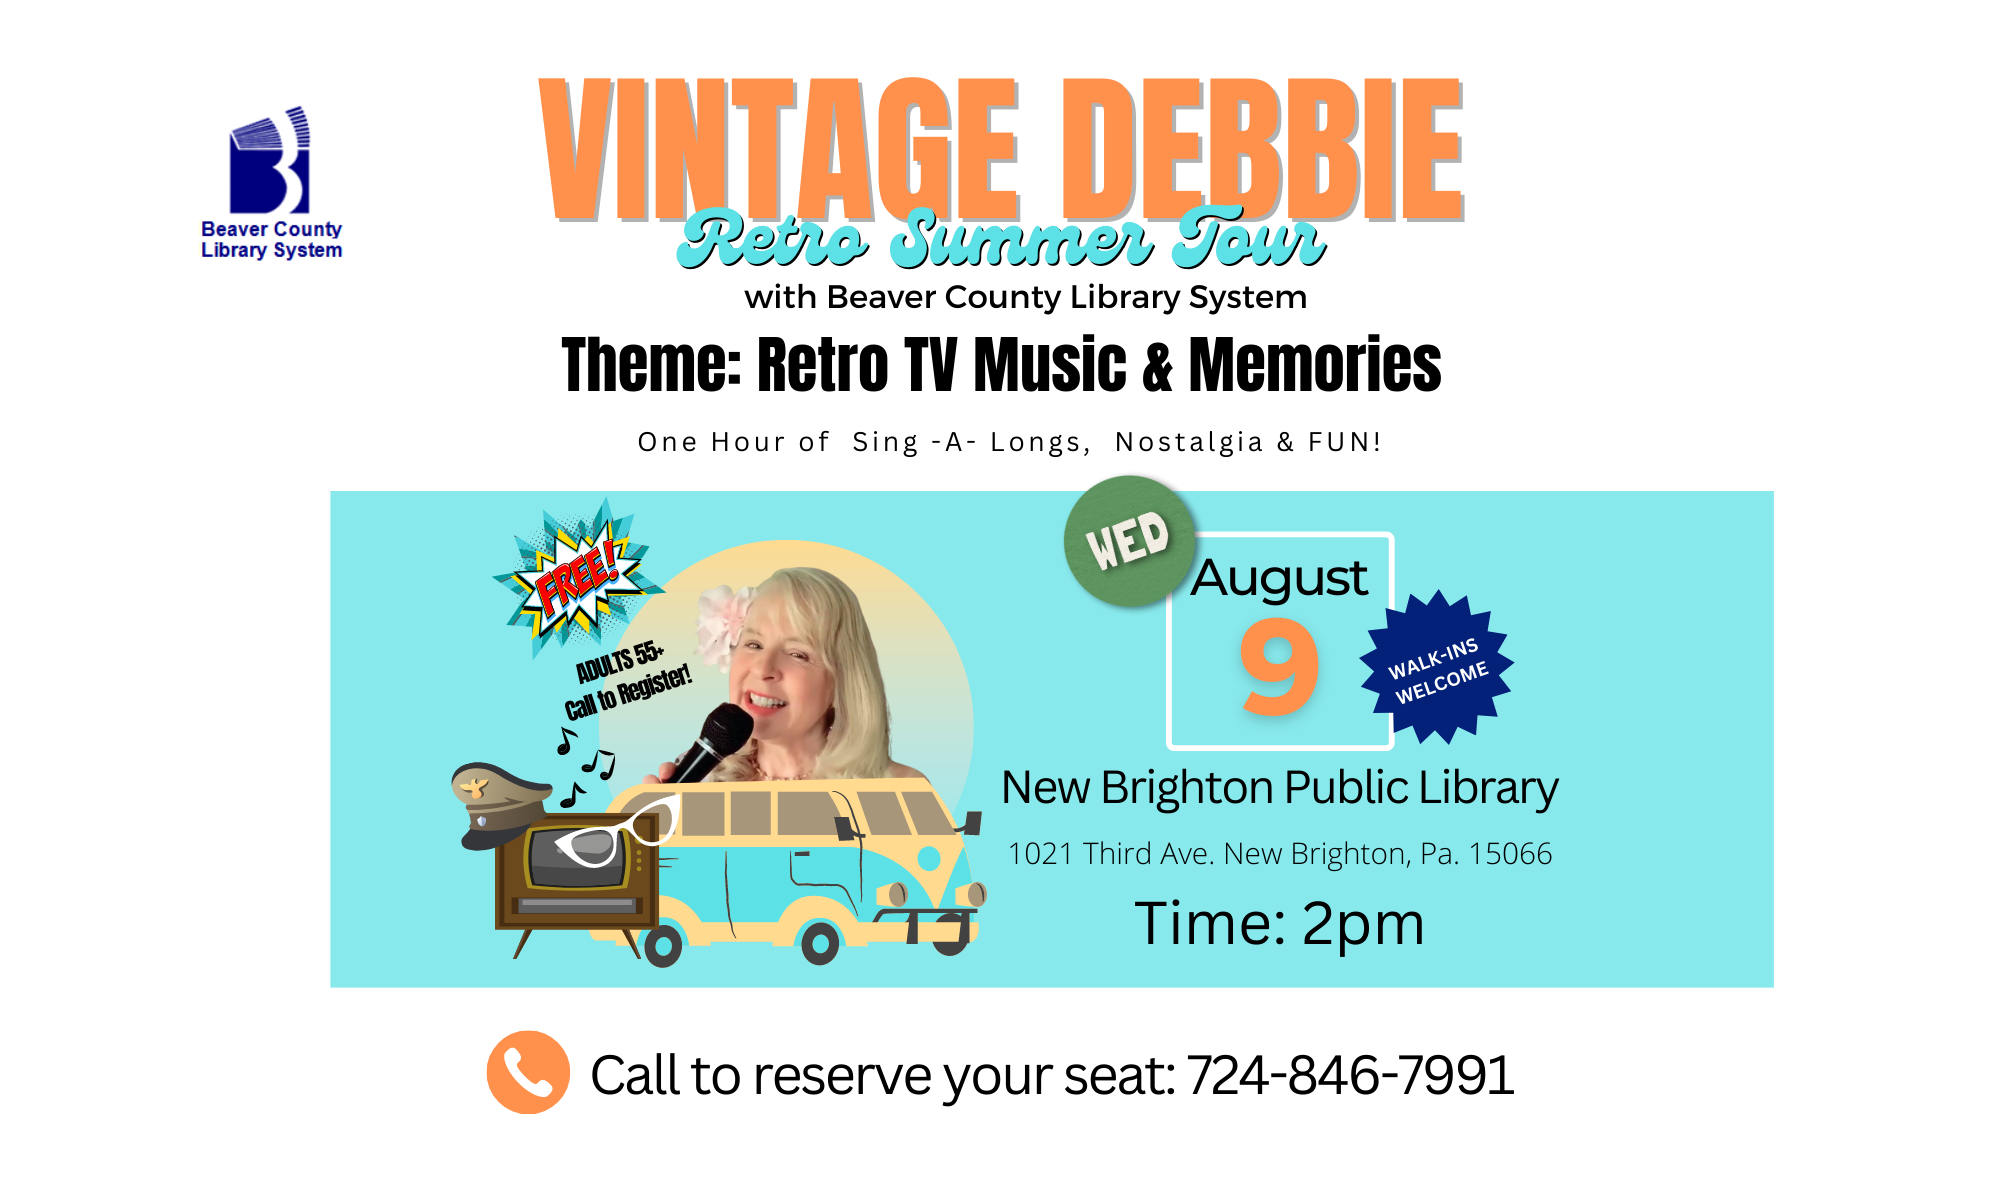 Vintage Debbie: Retro TV Music & Memories